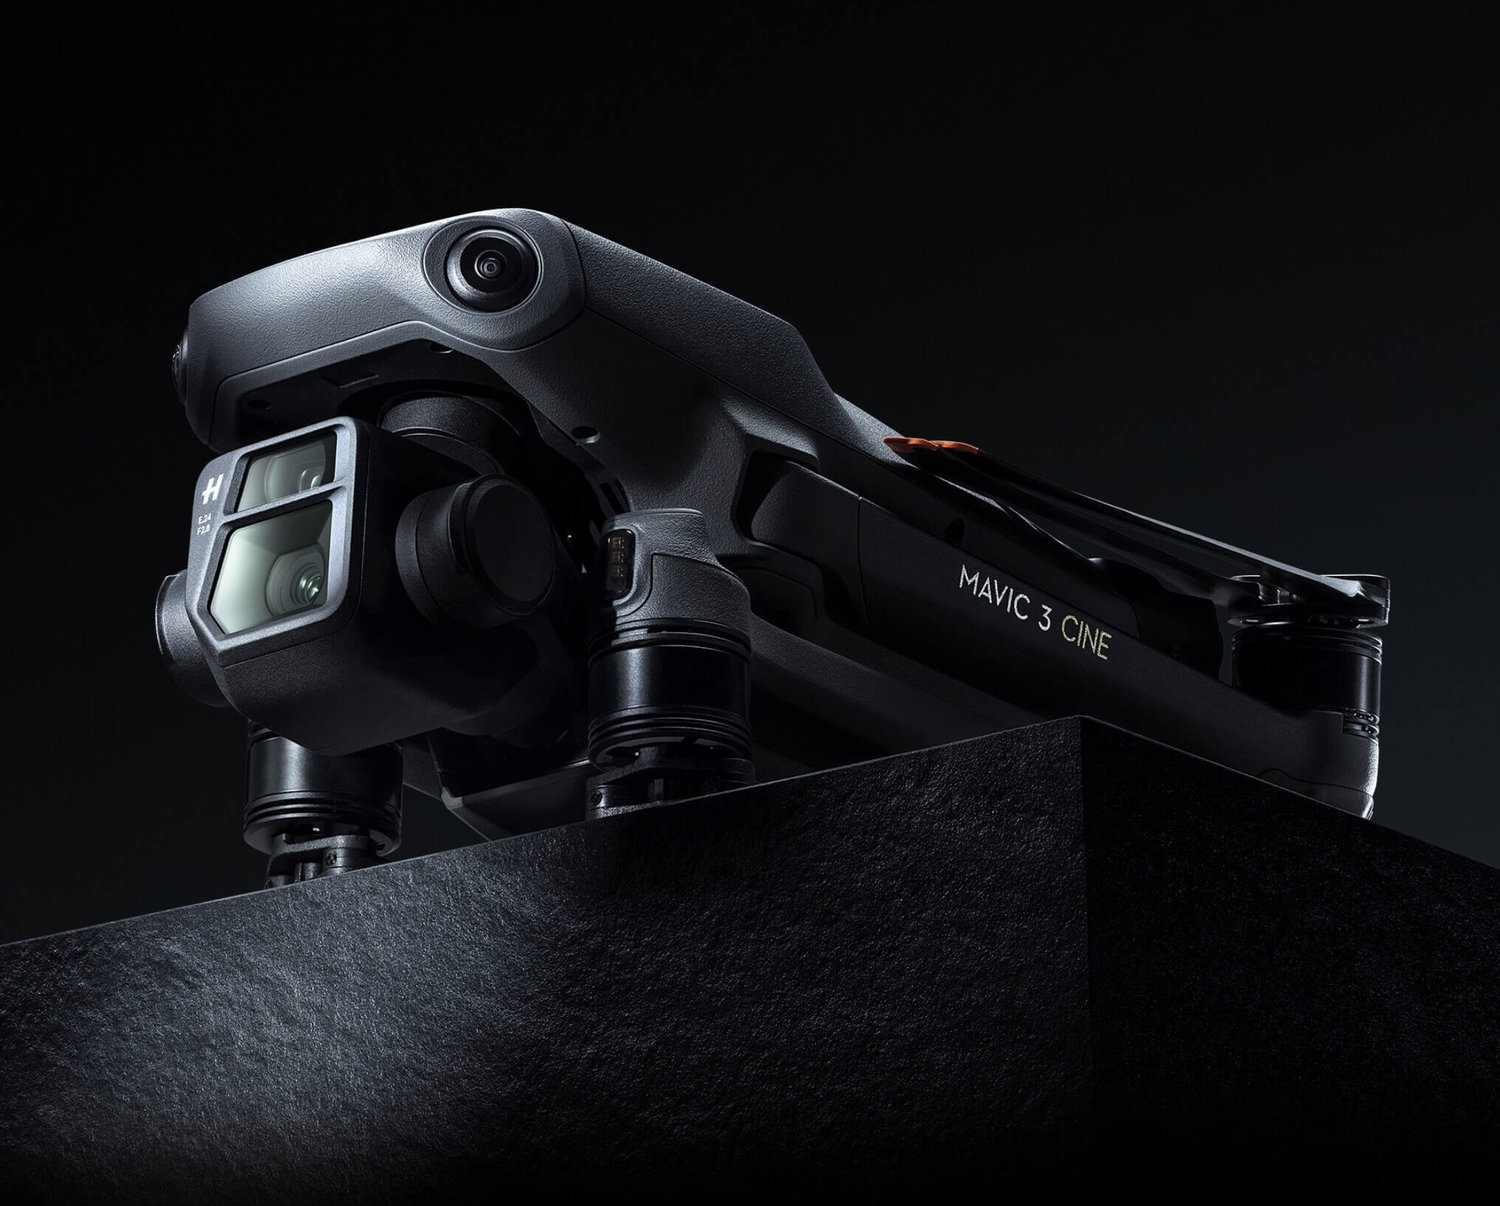 DJI Announces the new Mavic 3 Drone with Dual-Camera Gimbal